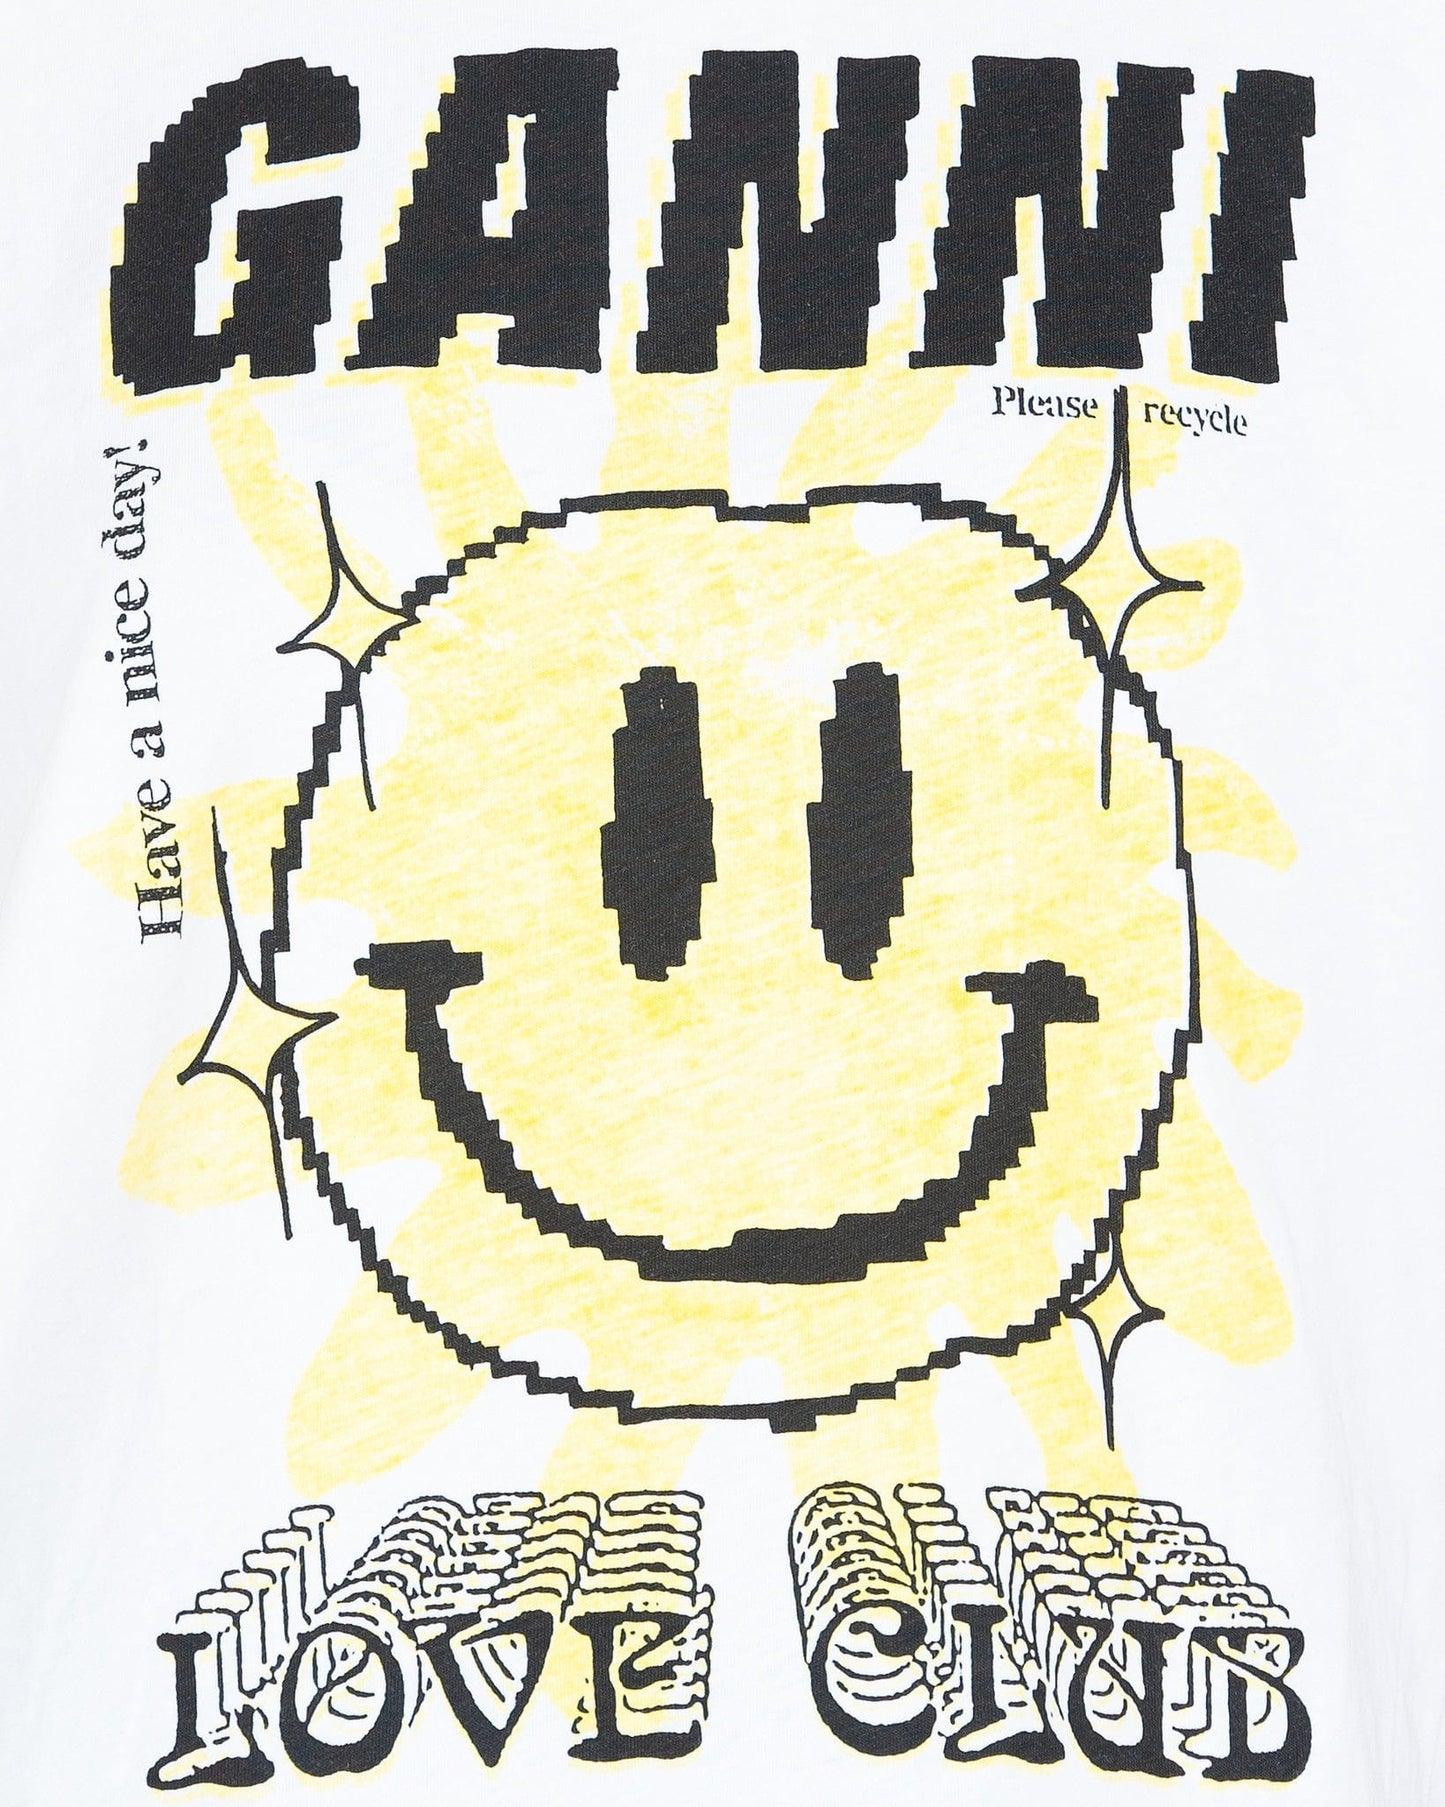 Ganni Women T-Shirts Light Cotton Jersey in Bright White